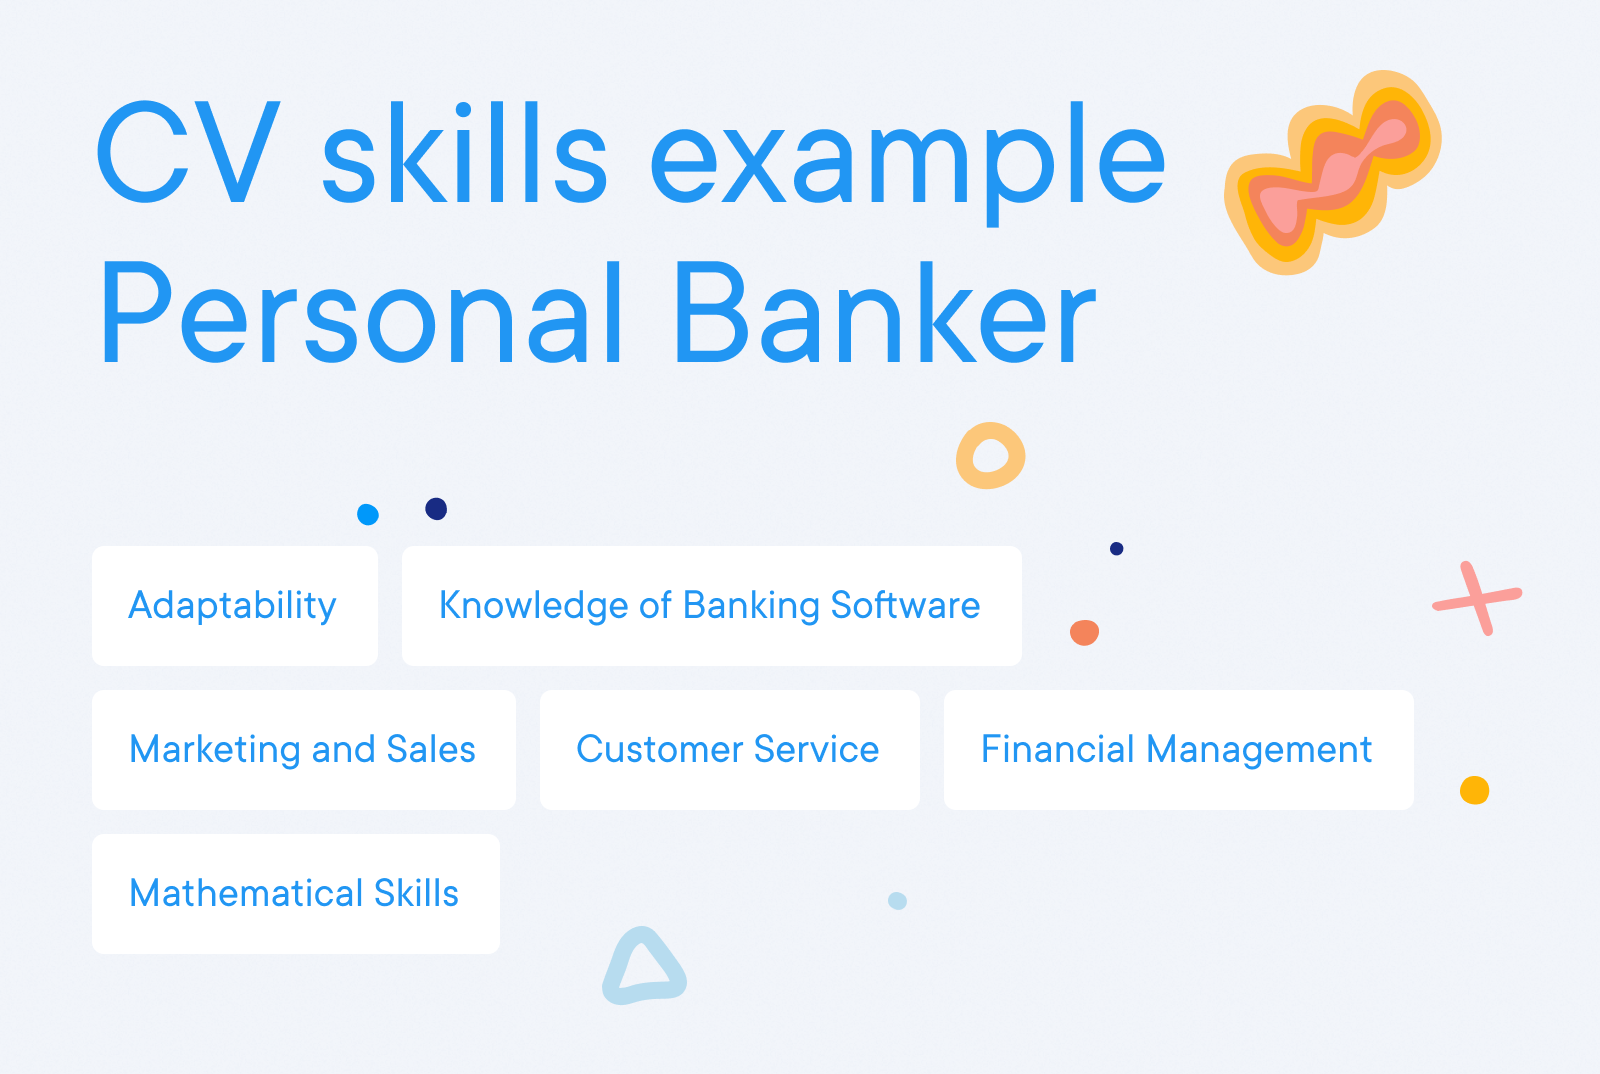 Personal Banker - CV skills example Personal Banker